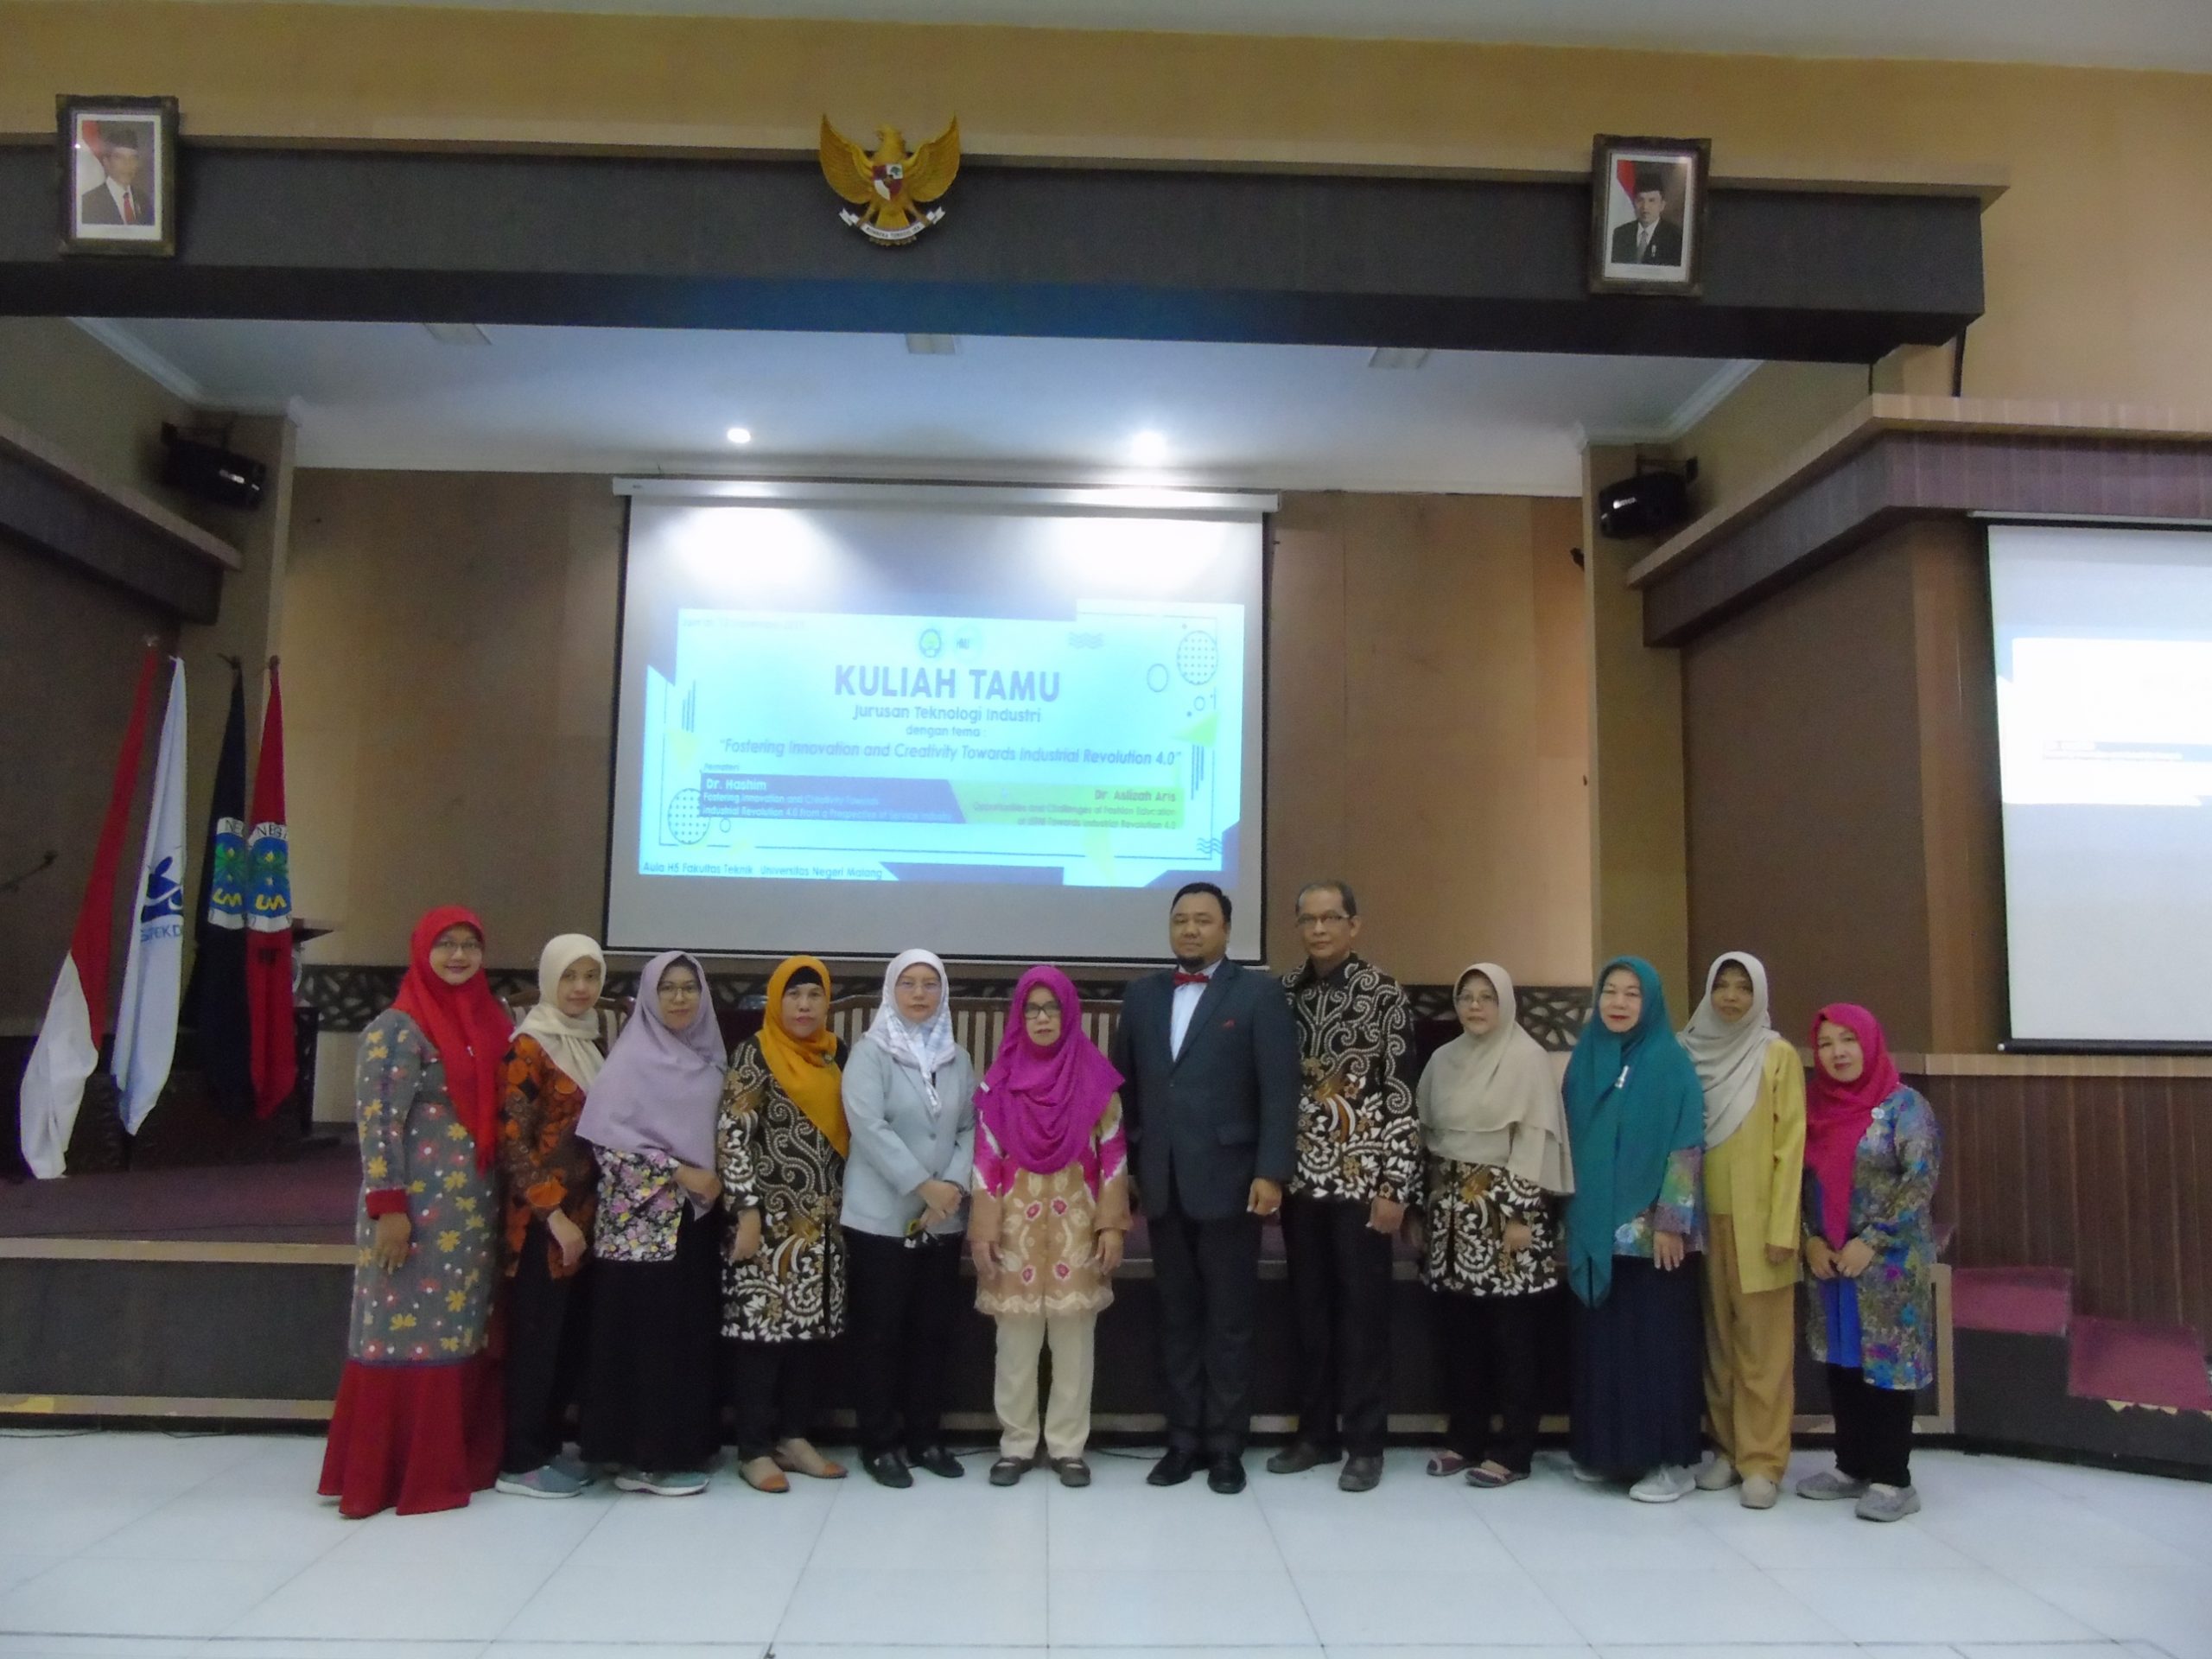 Kuliah Tamu (International Guest Lecture) : Fastering Innovation and Creativity Towards Industrial Revolution 4.0 – Jurusan Teknologi Industri FT UM